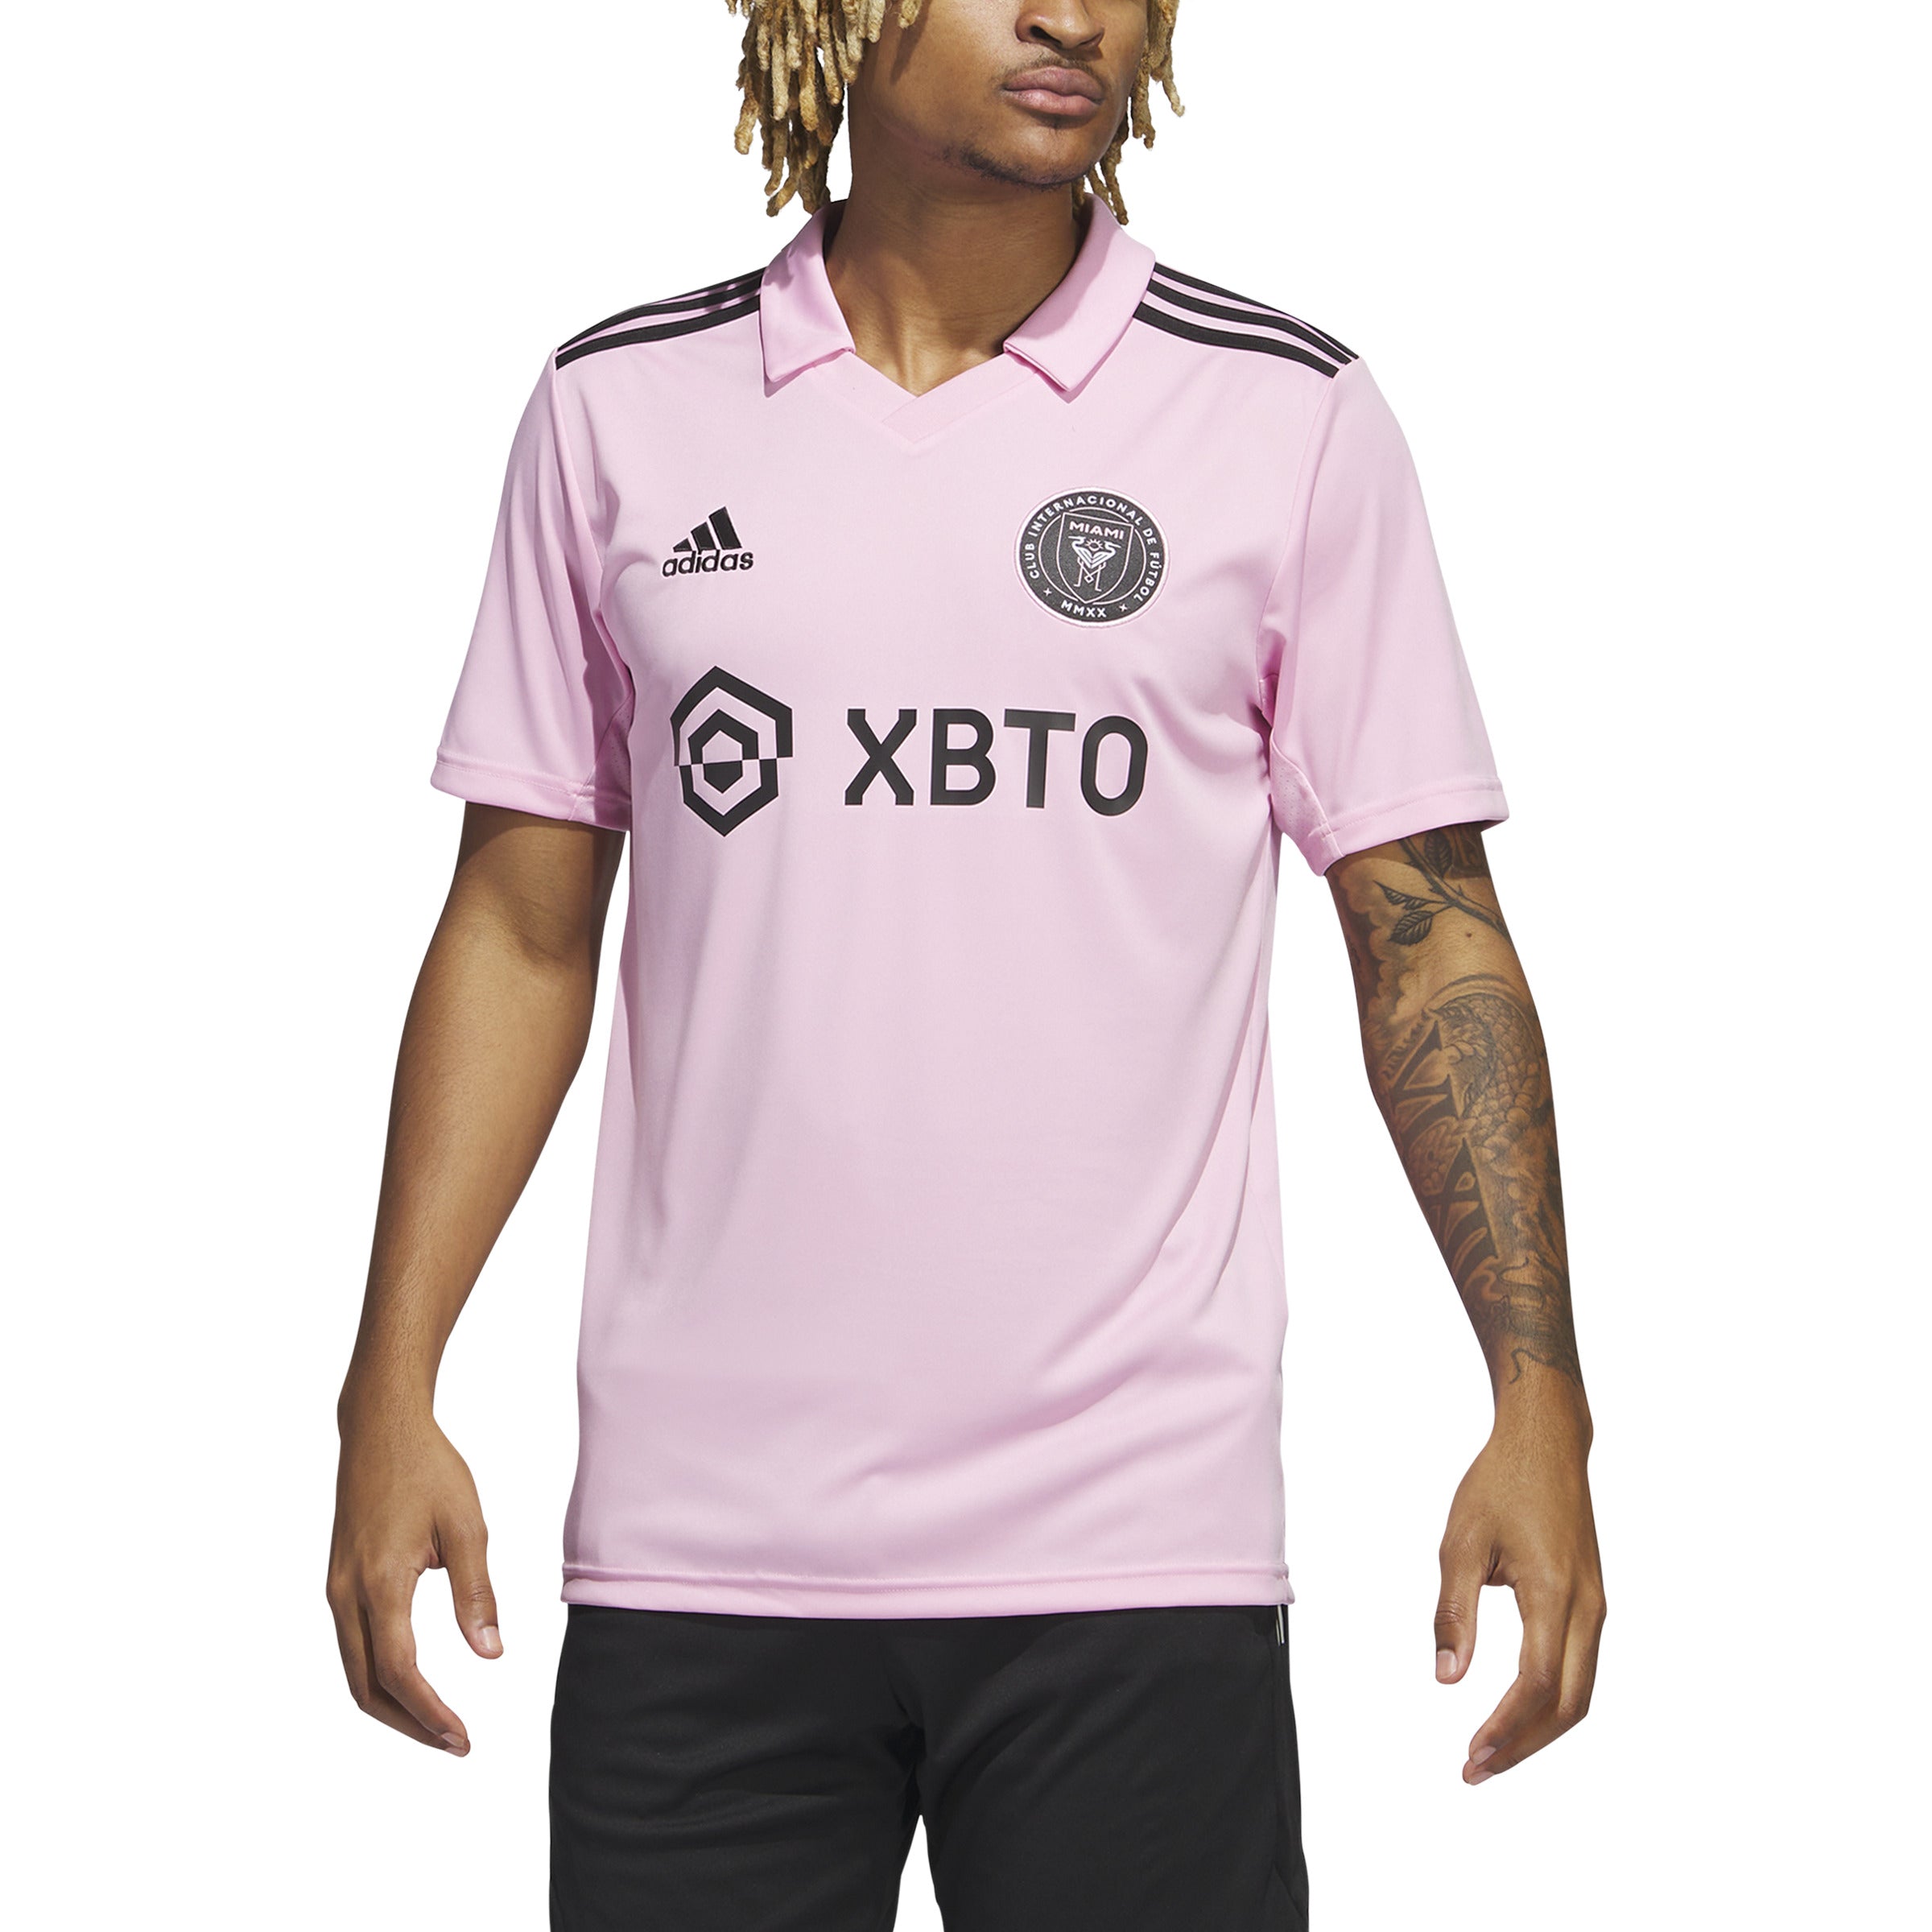 Pre-Order Inter Miami CF adidas MESSI #10 Replica Home Jersey - Pink